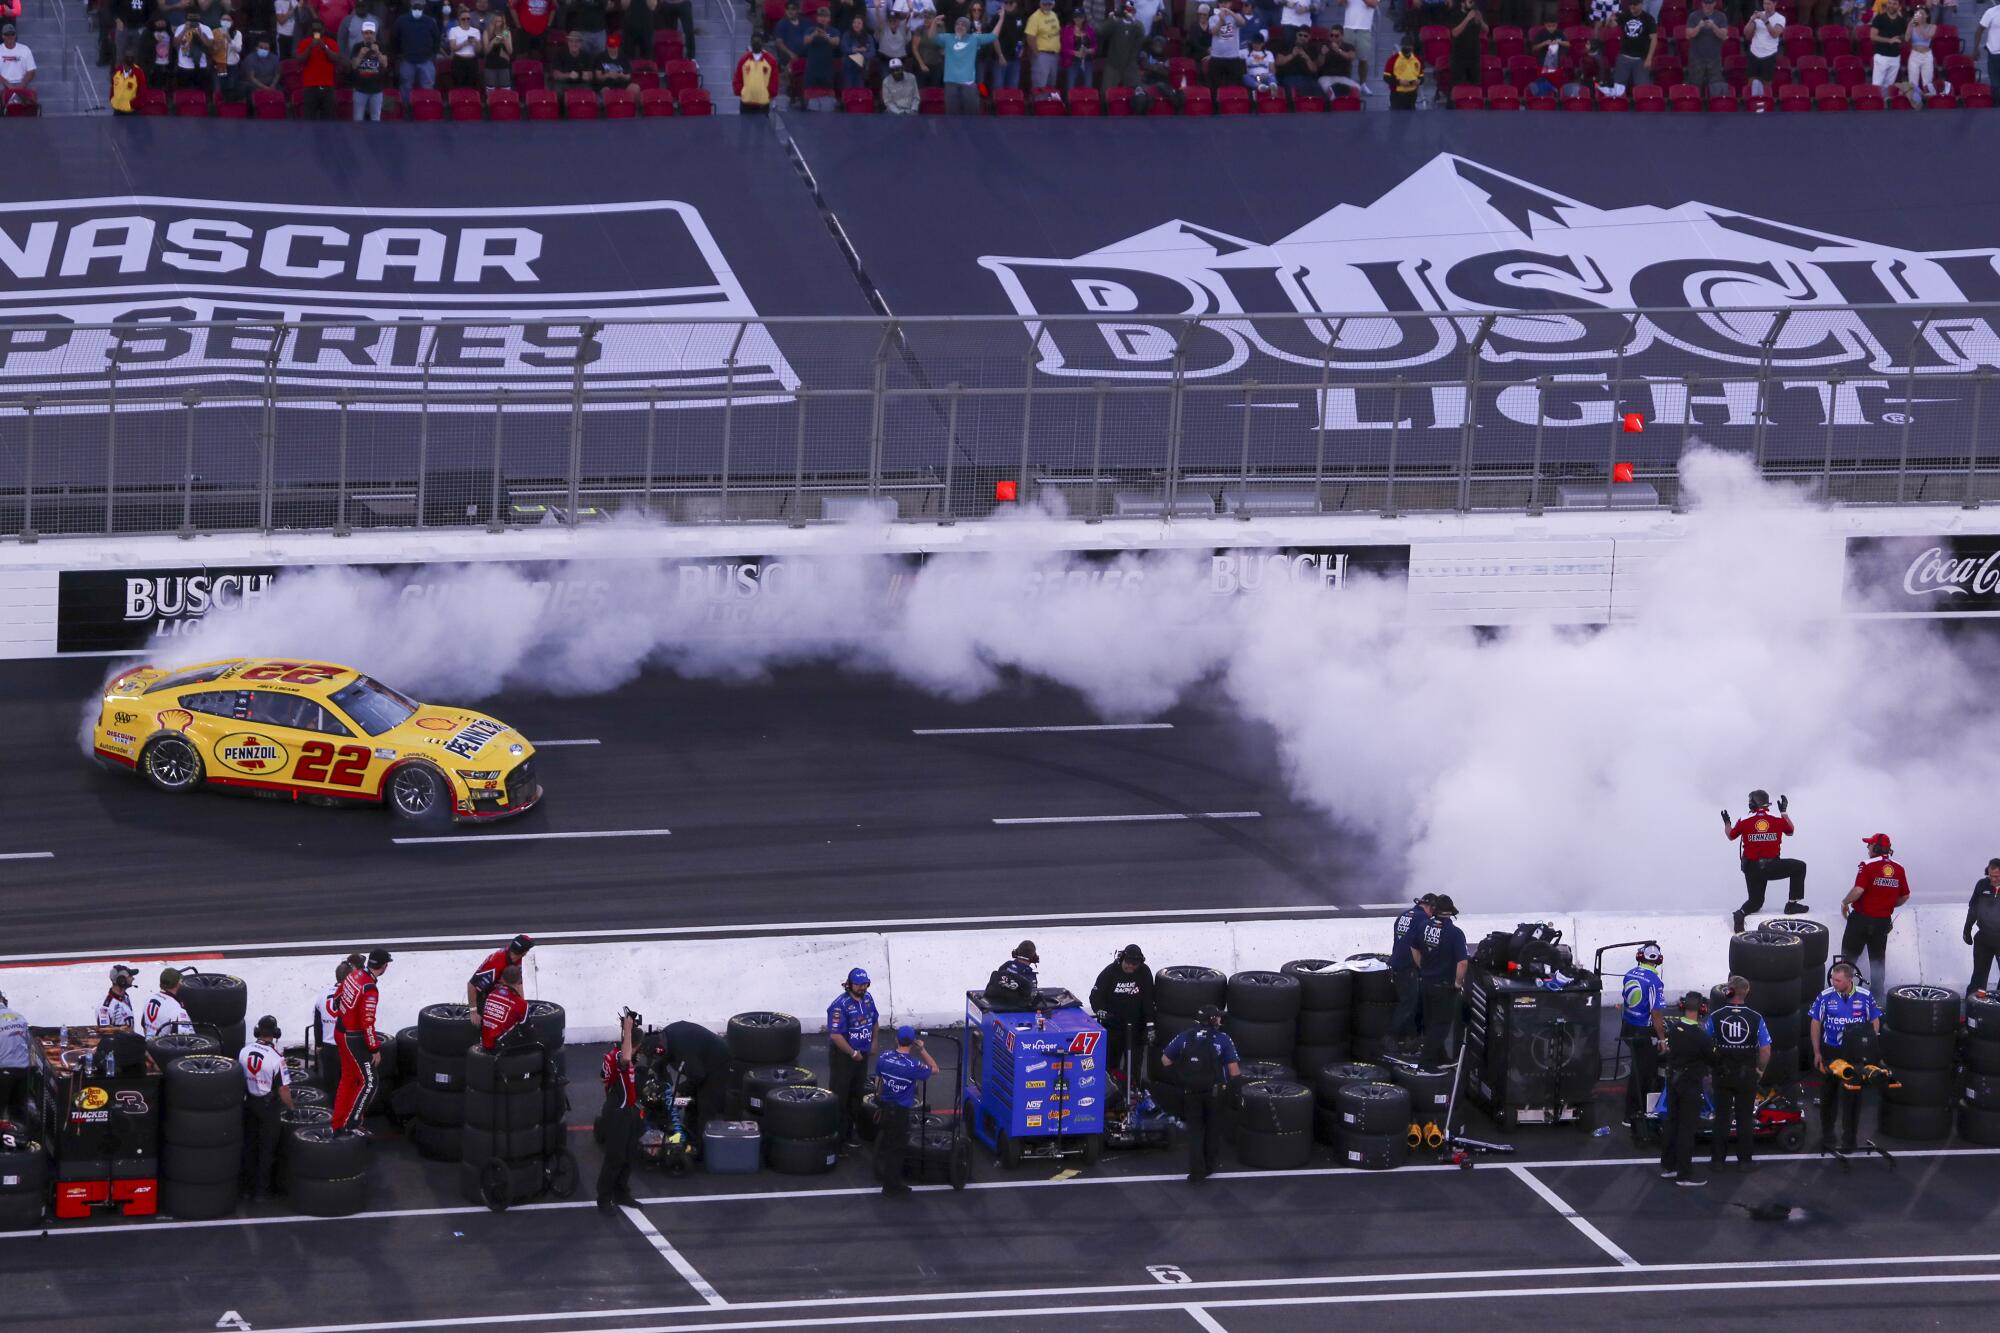 NASCAR driver Joey Logano, #22, does a celebratory burn-out